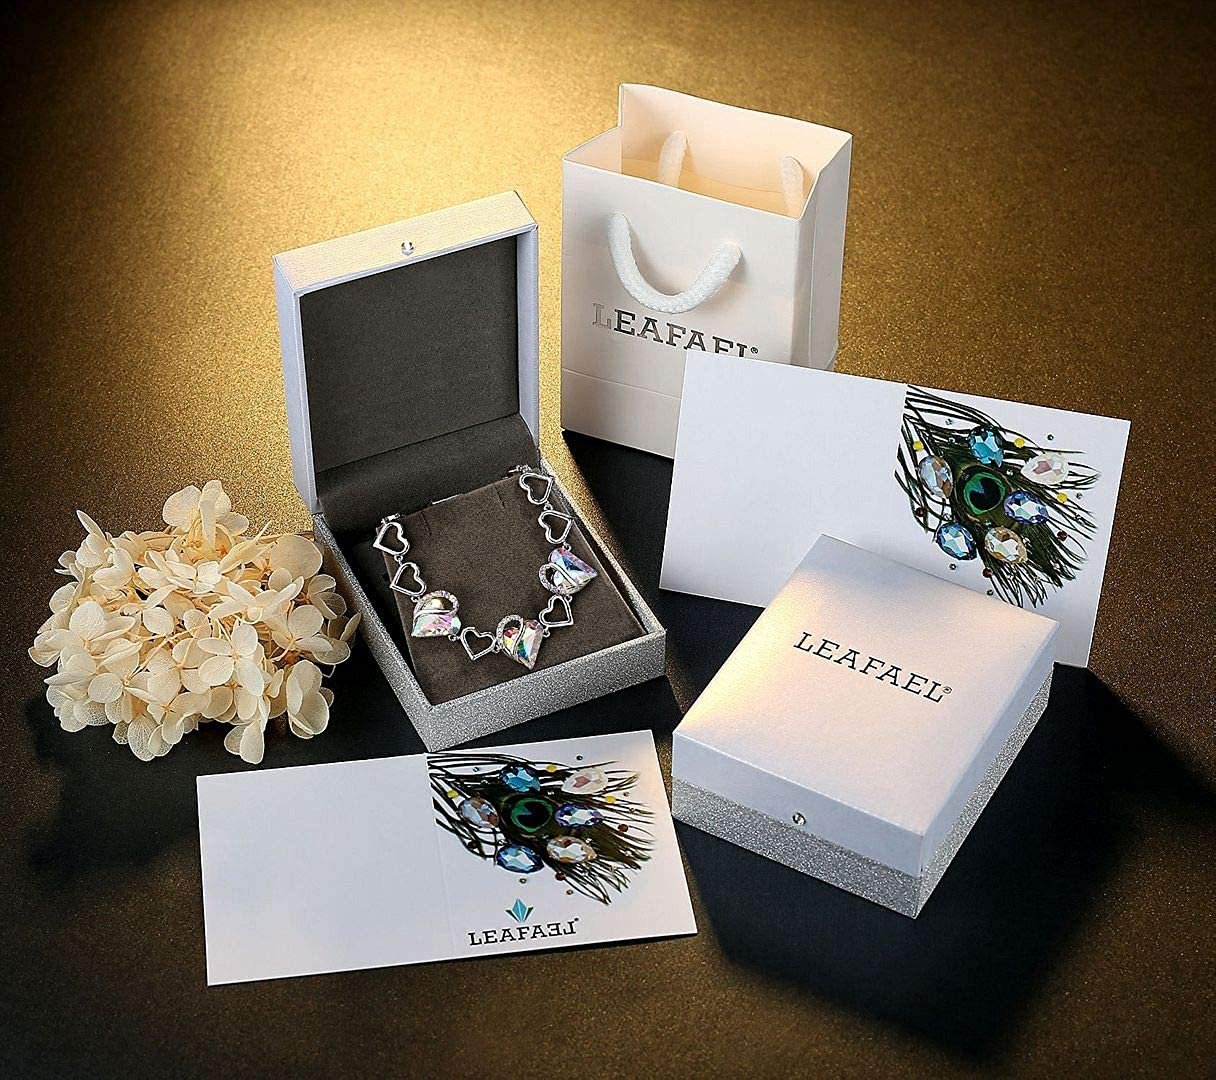 Leafael Infinity Love Heart with Wom Jewelry Crystal, Leafael Link Bracelet – Birthstone